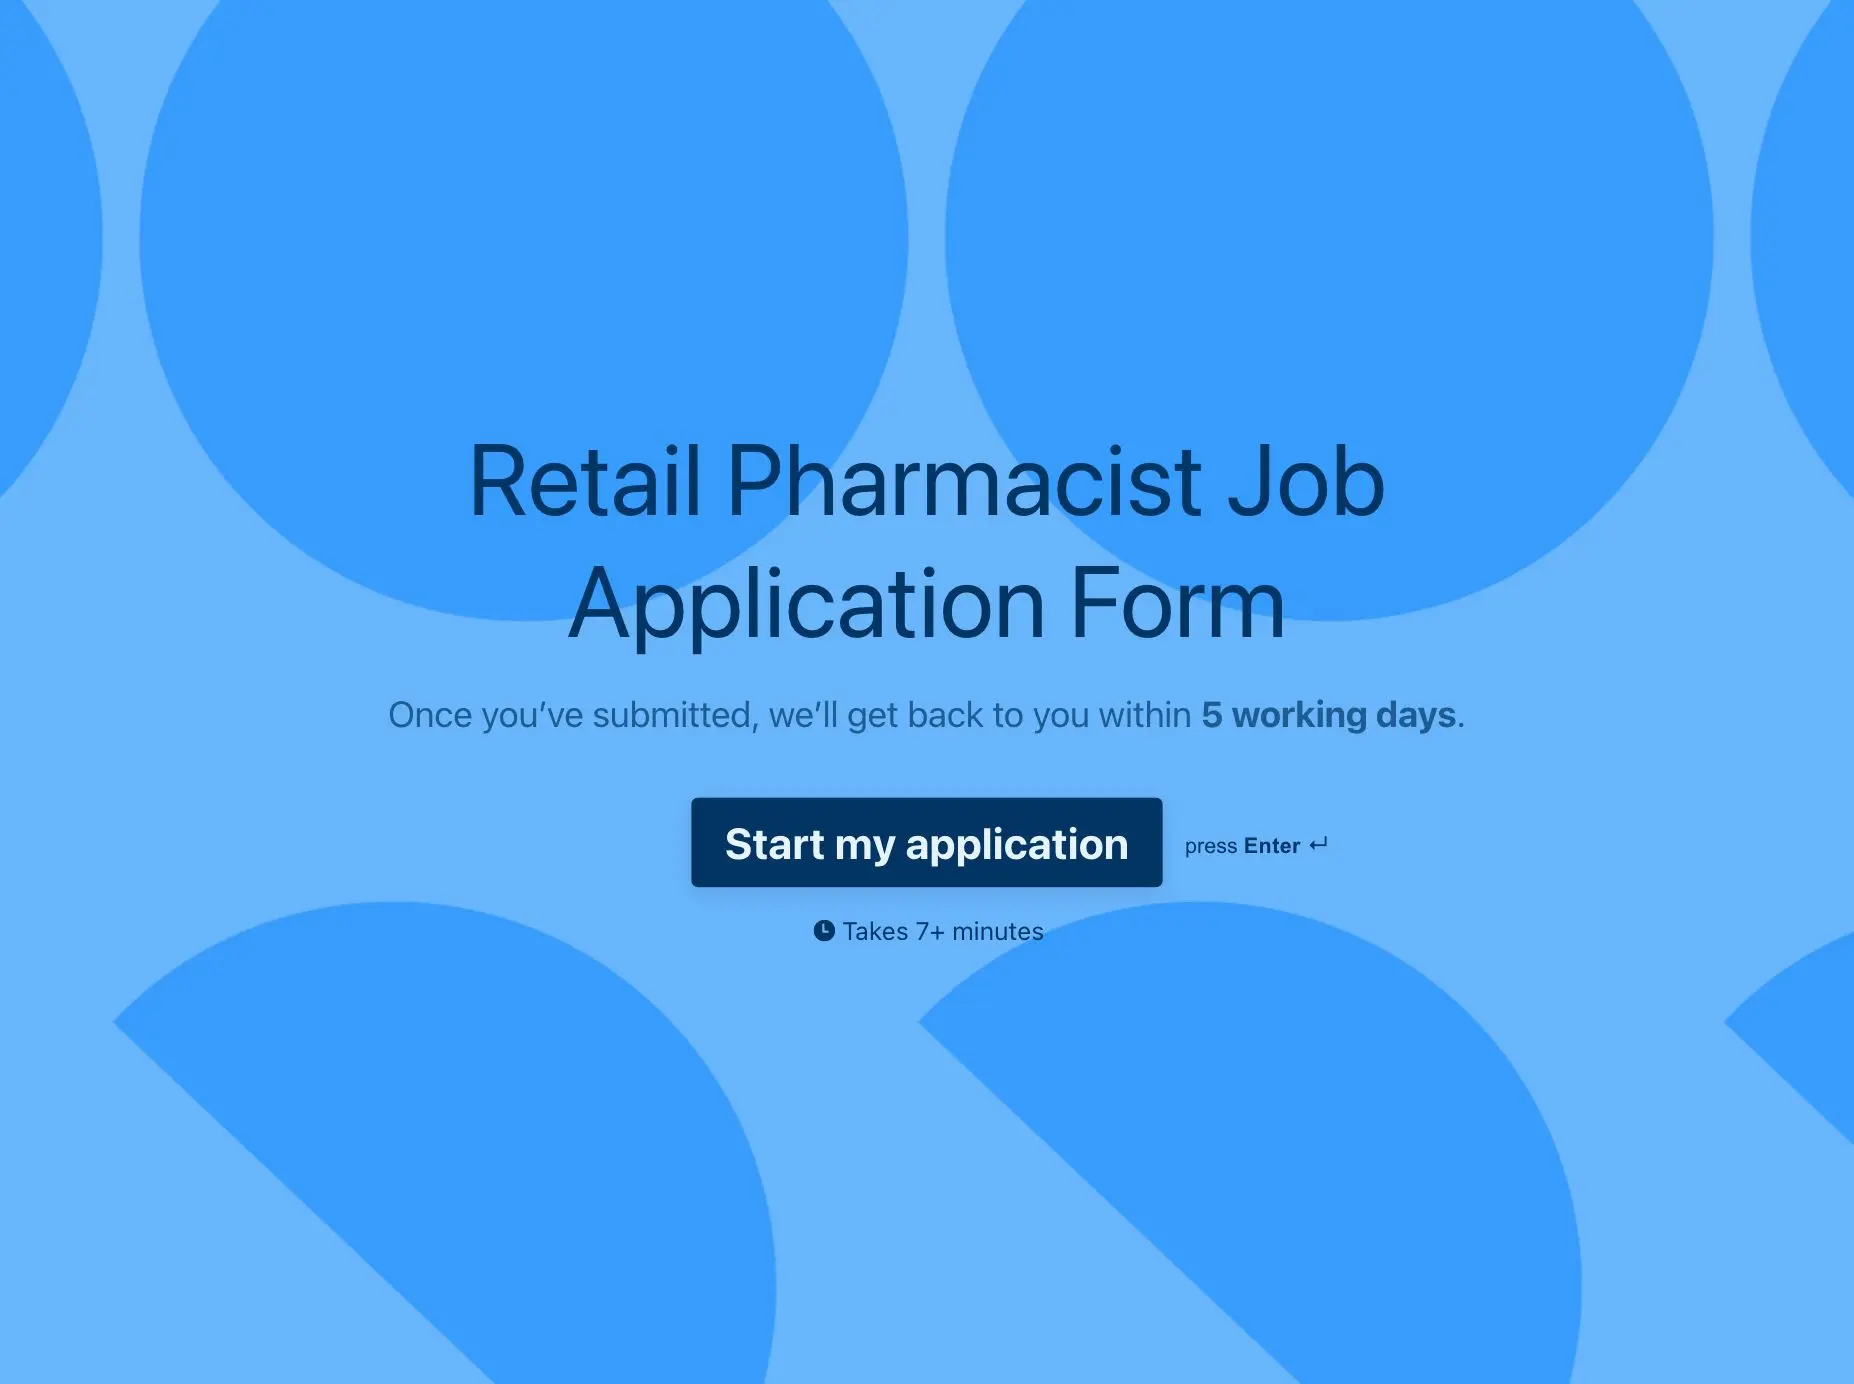 Retail Pharmacist Job Application Form Template Hero